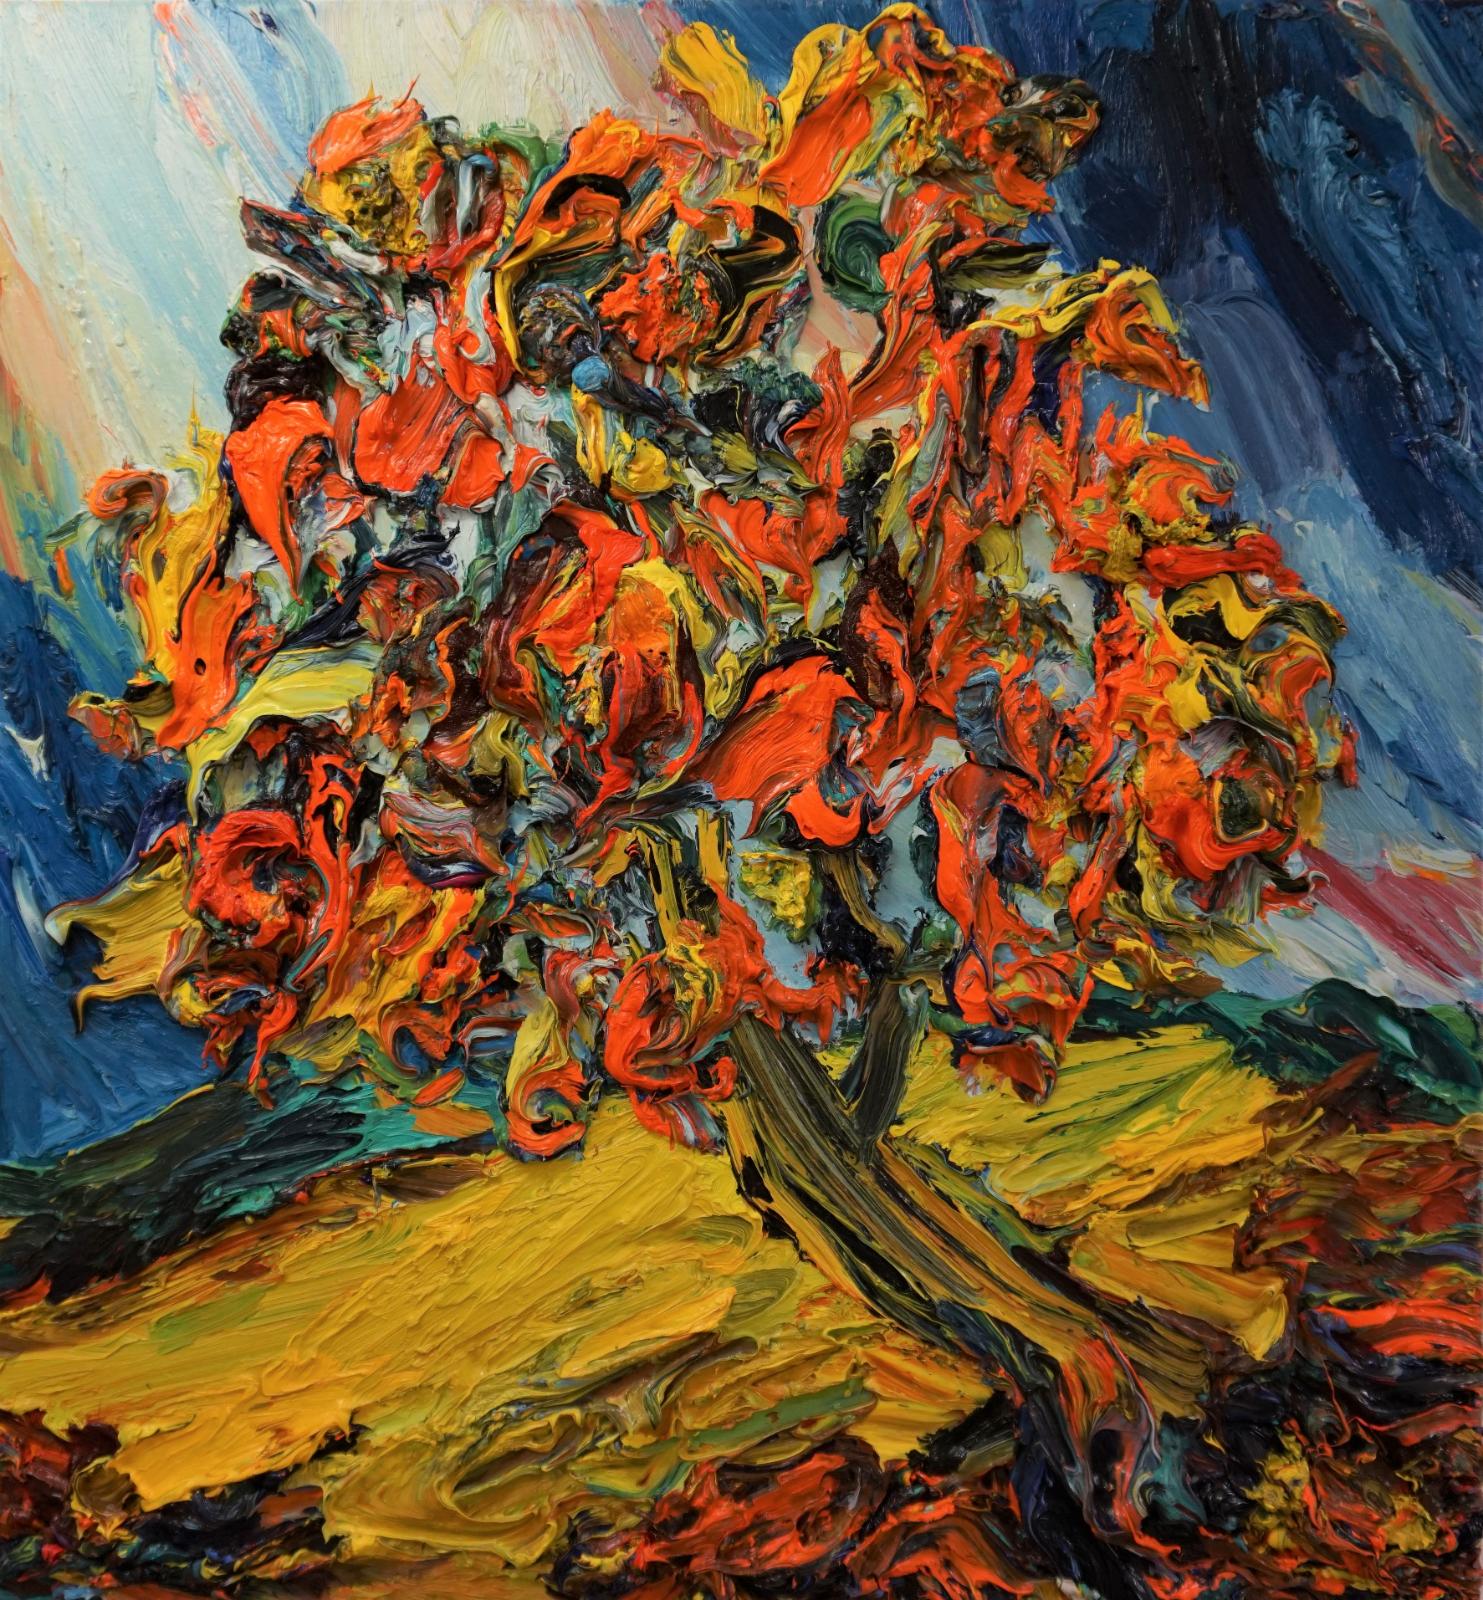 Harry Meyer, Baum, 2020, Öl auf Leinwand, 75 x 70 cm, Preis auf Anfrage, mey038ko